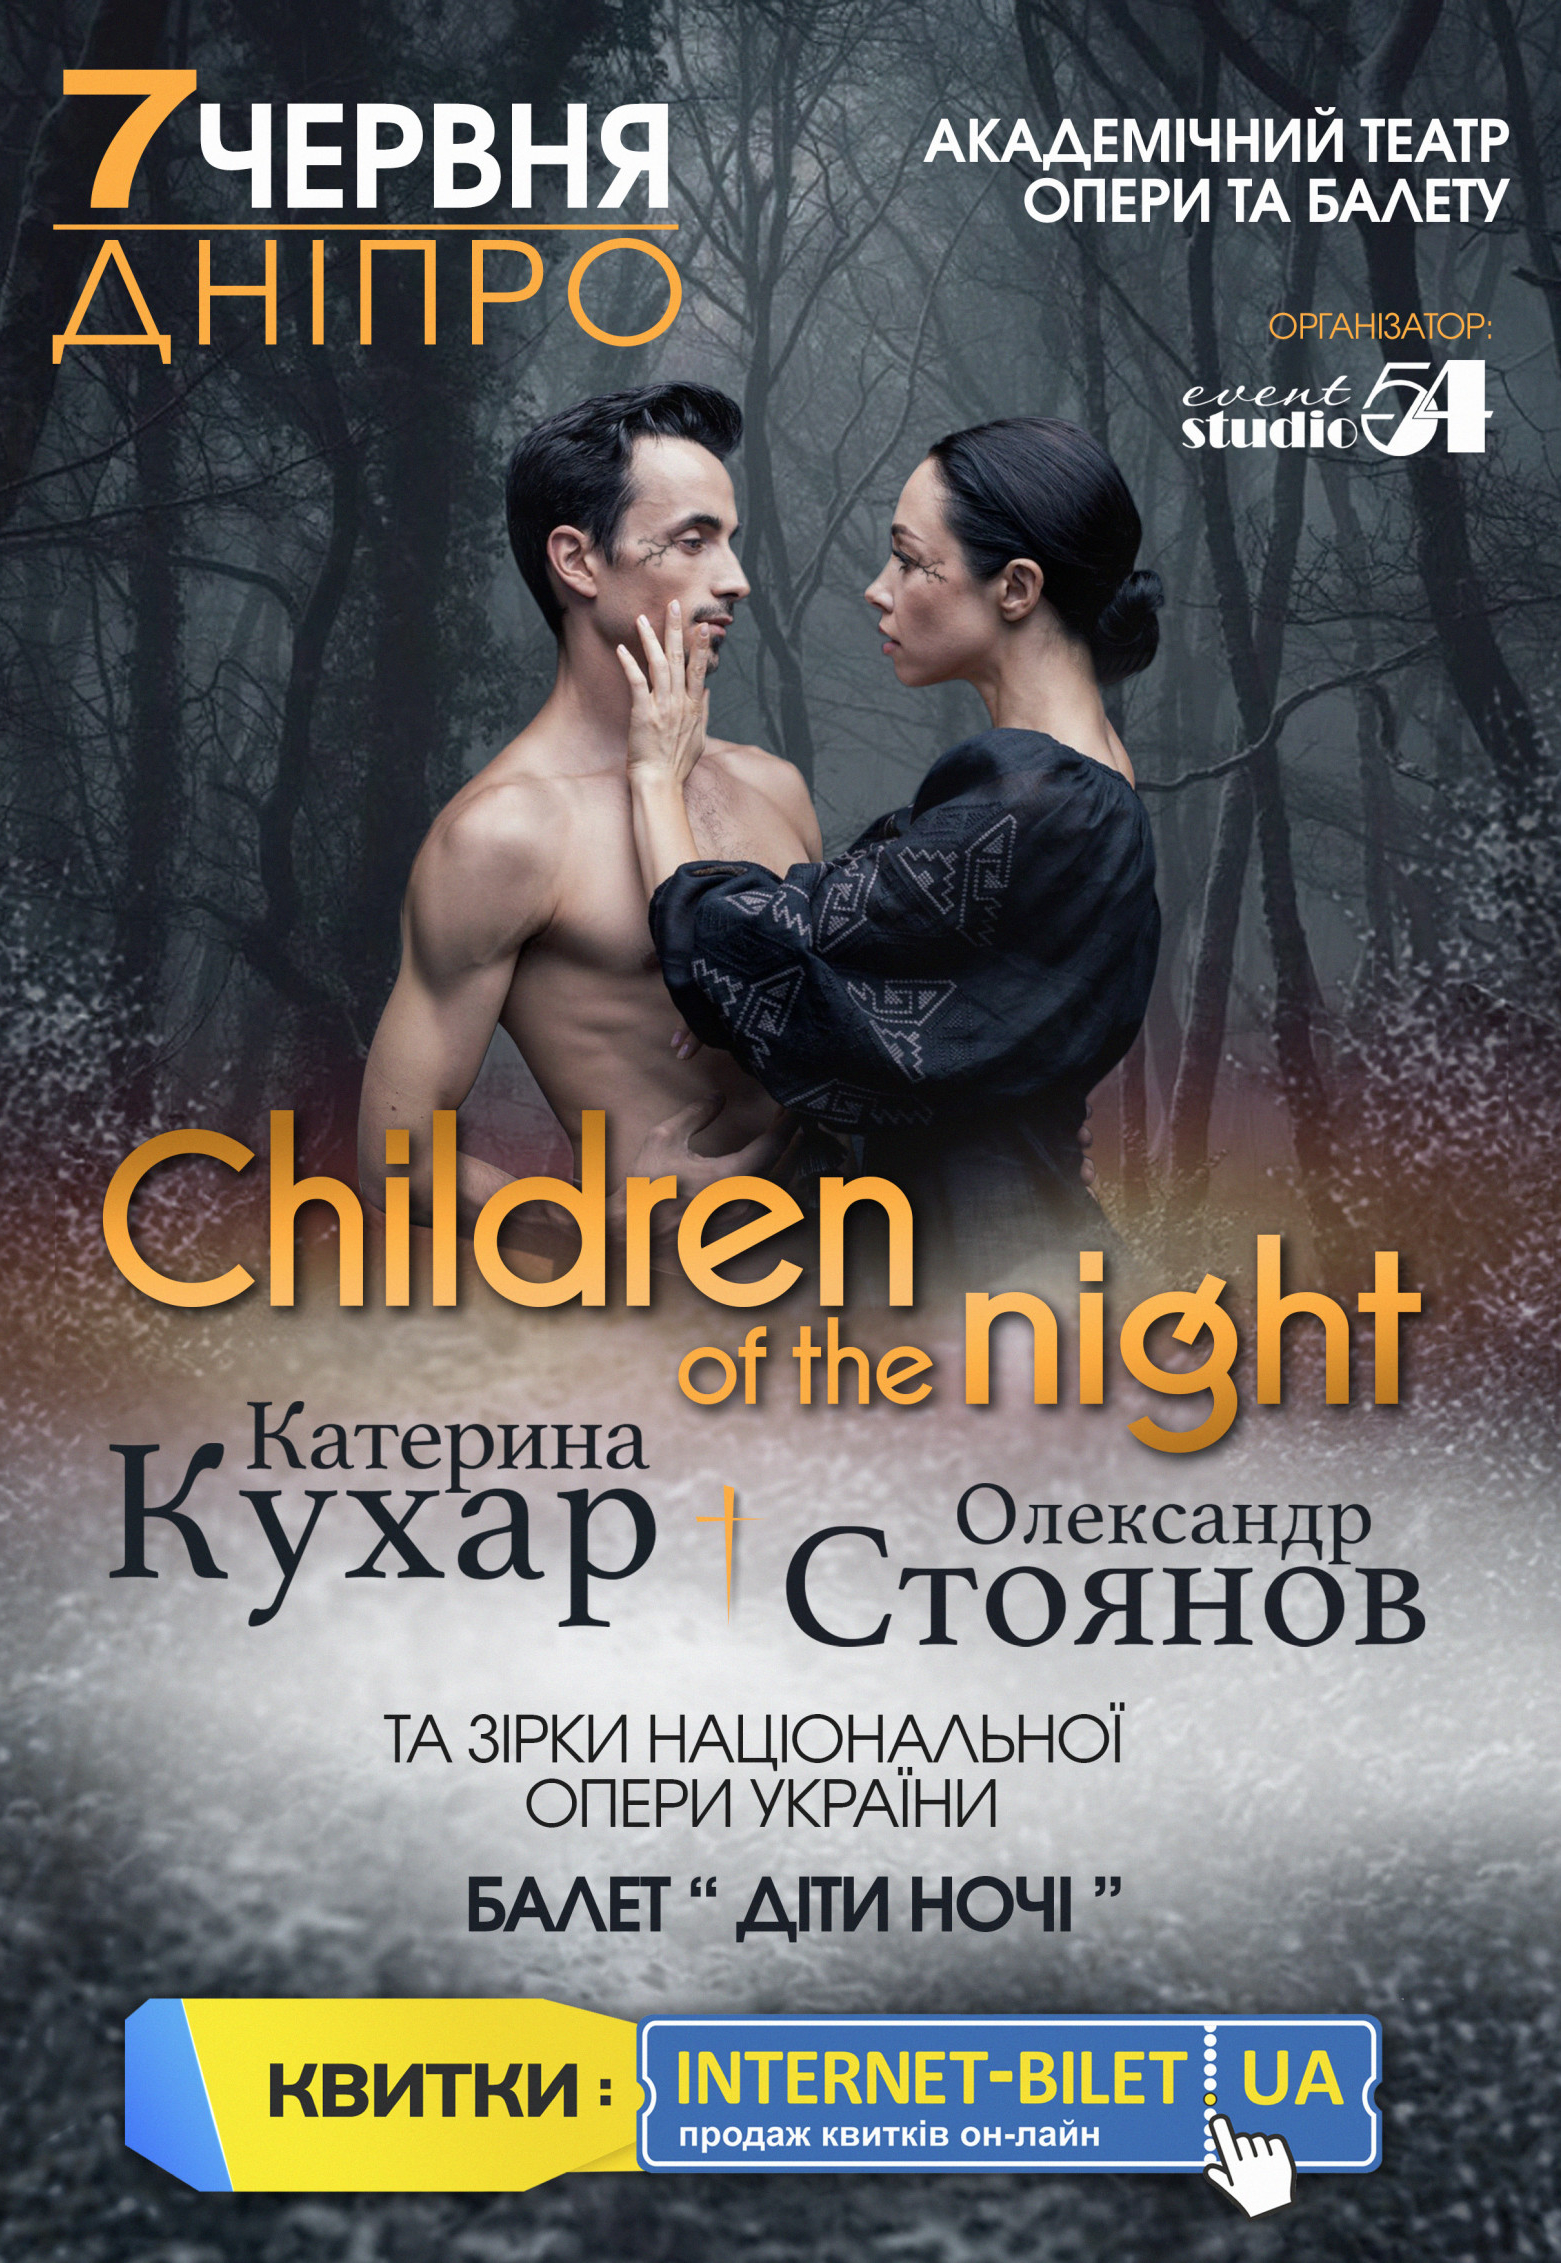 Children of the Night Днепр, 07.06.2021, цена, расписание. Афиша Днепра